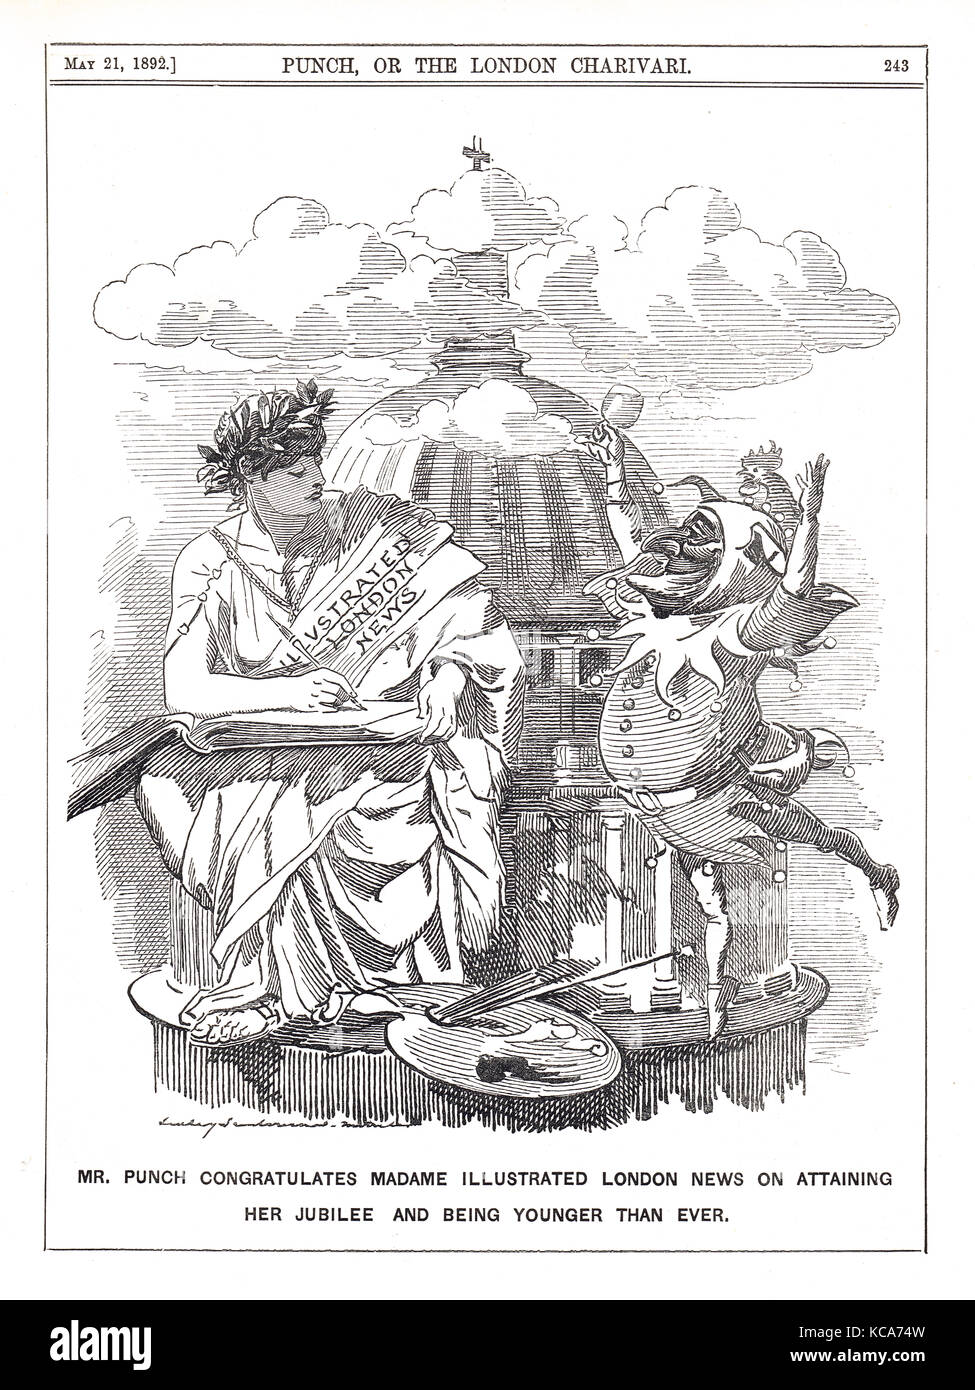 Illustrated London News Jubilee 1842-92. M. Punch félicite Madame Illustrated London News pour ses 50 années d'impression Banque D'Images